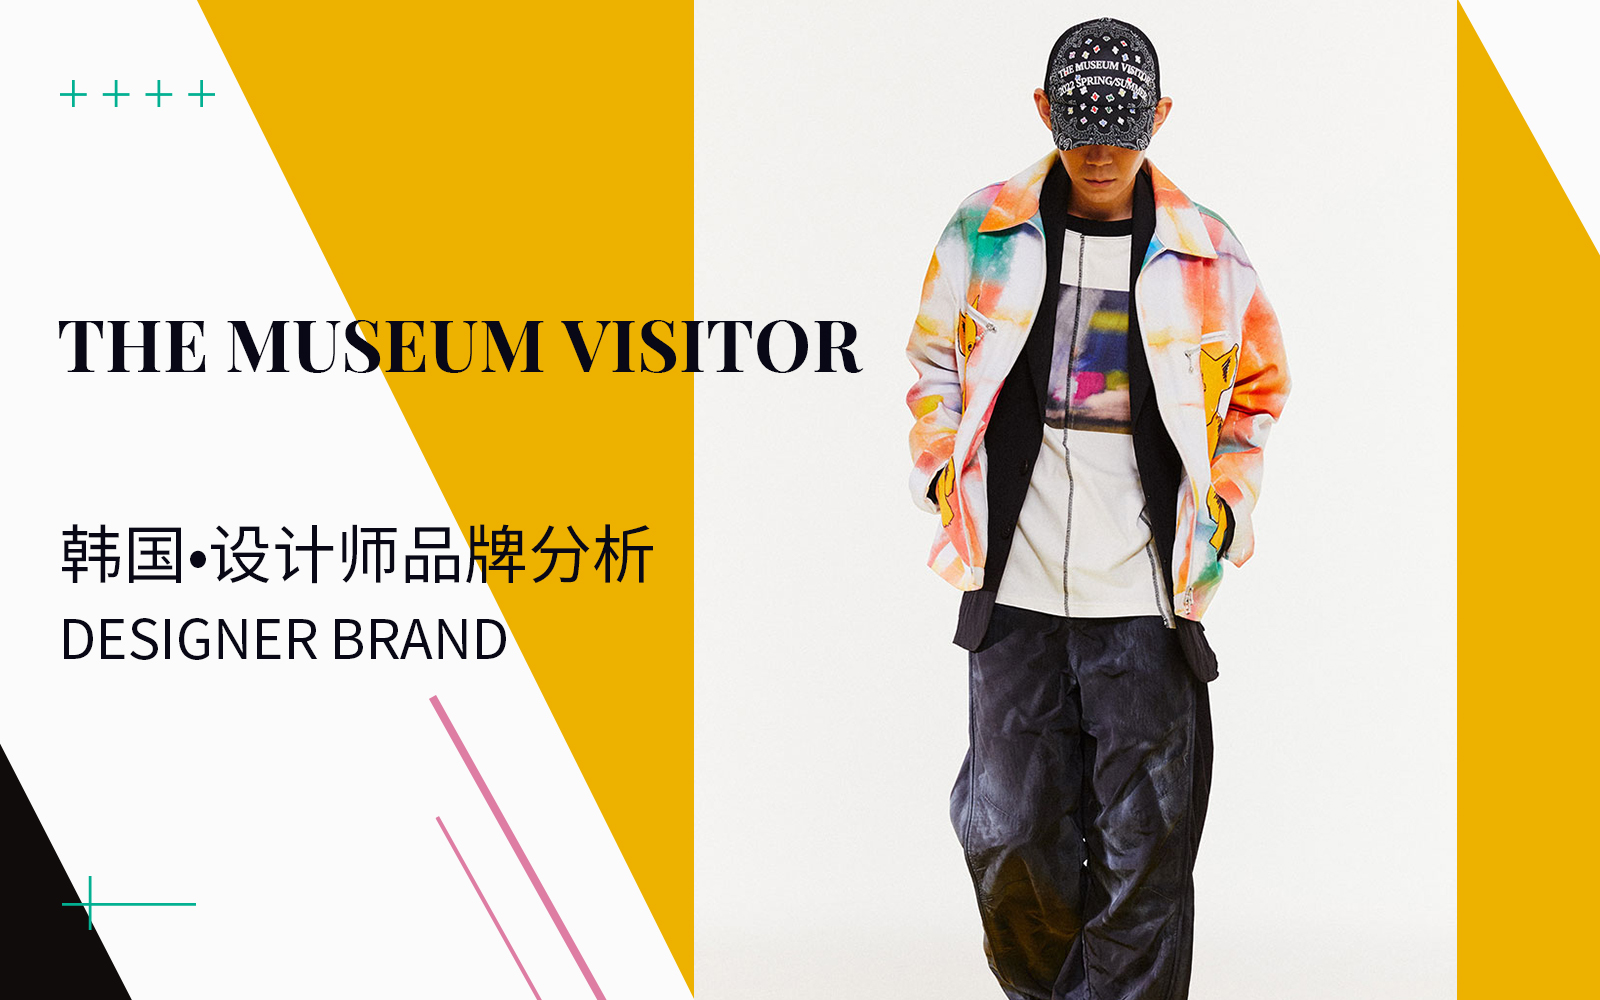 Playfulness & Street -- The Menswear Designer Brand Analysis of The Museum Visitor